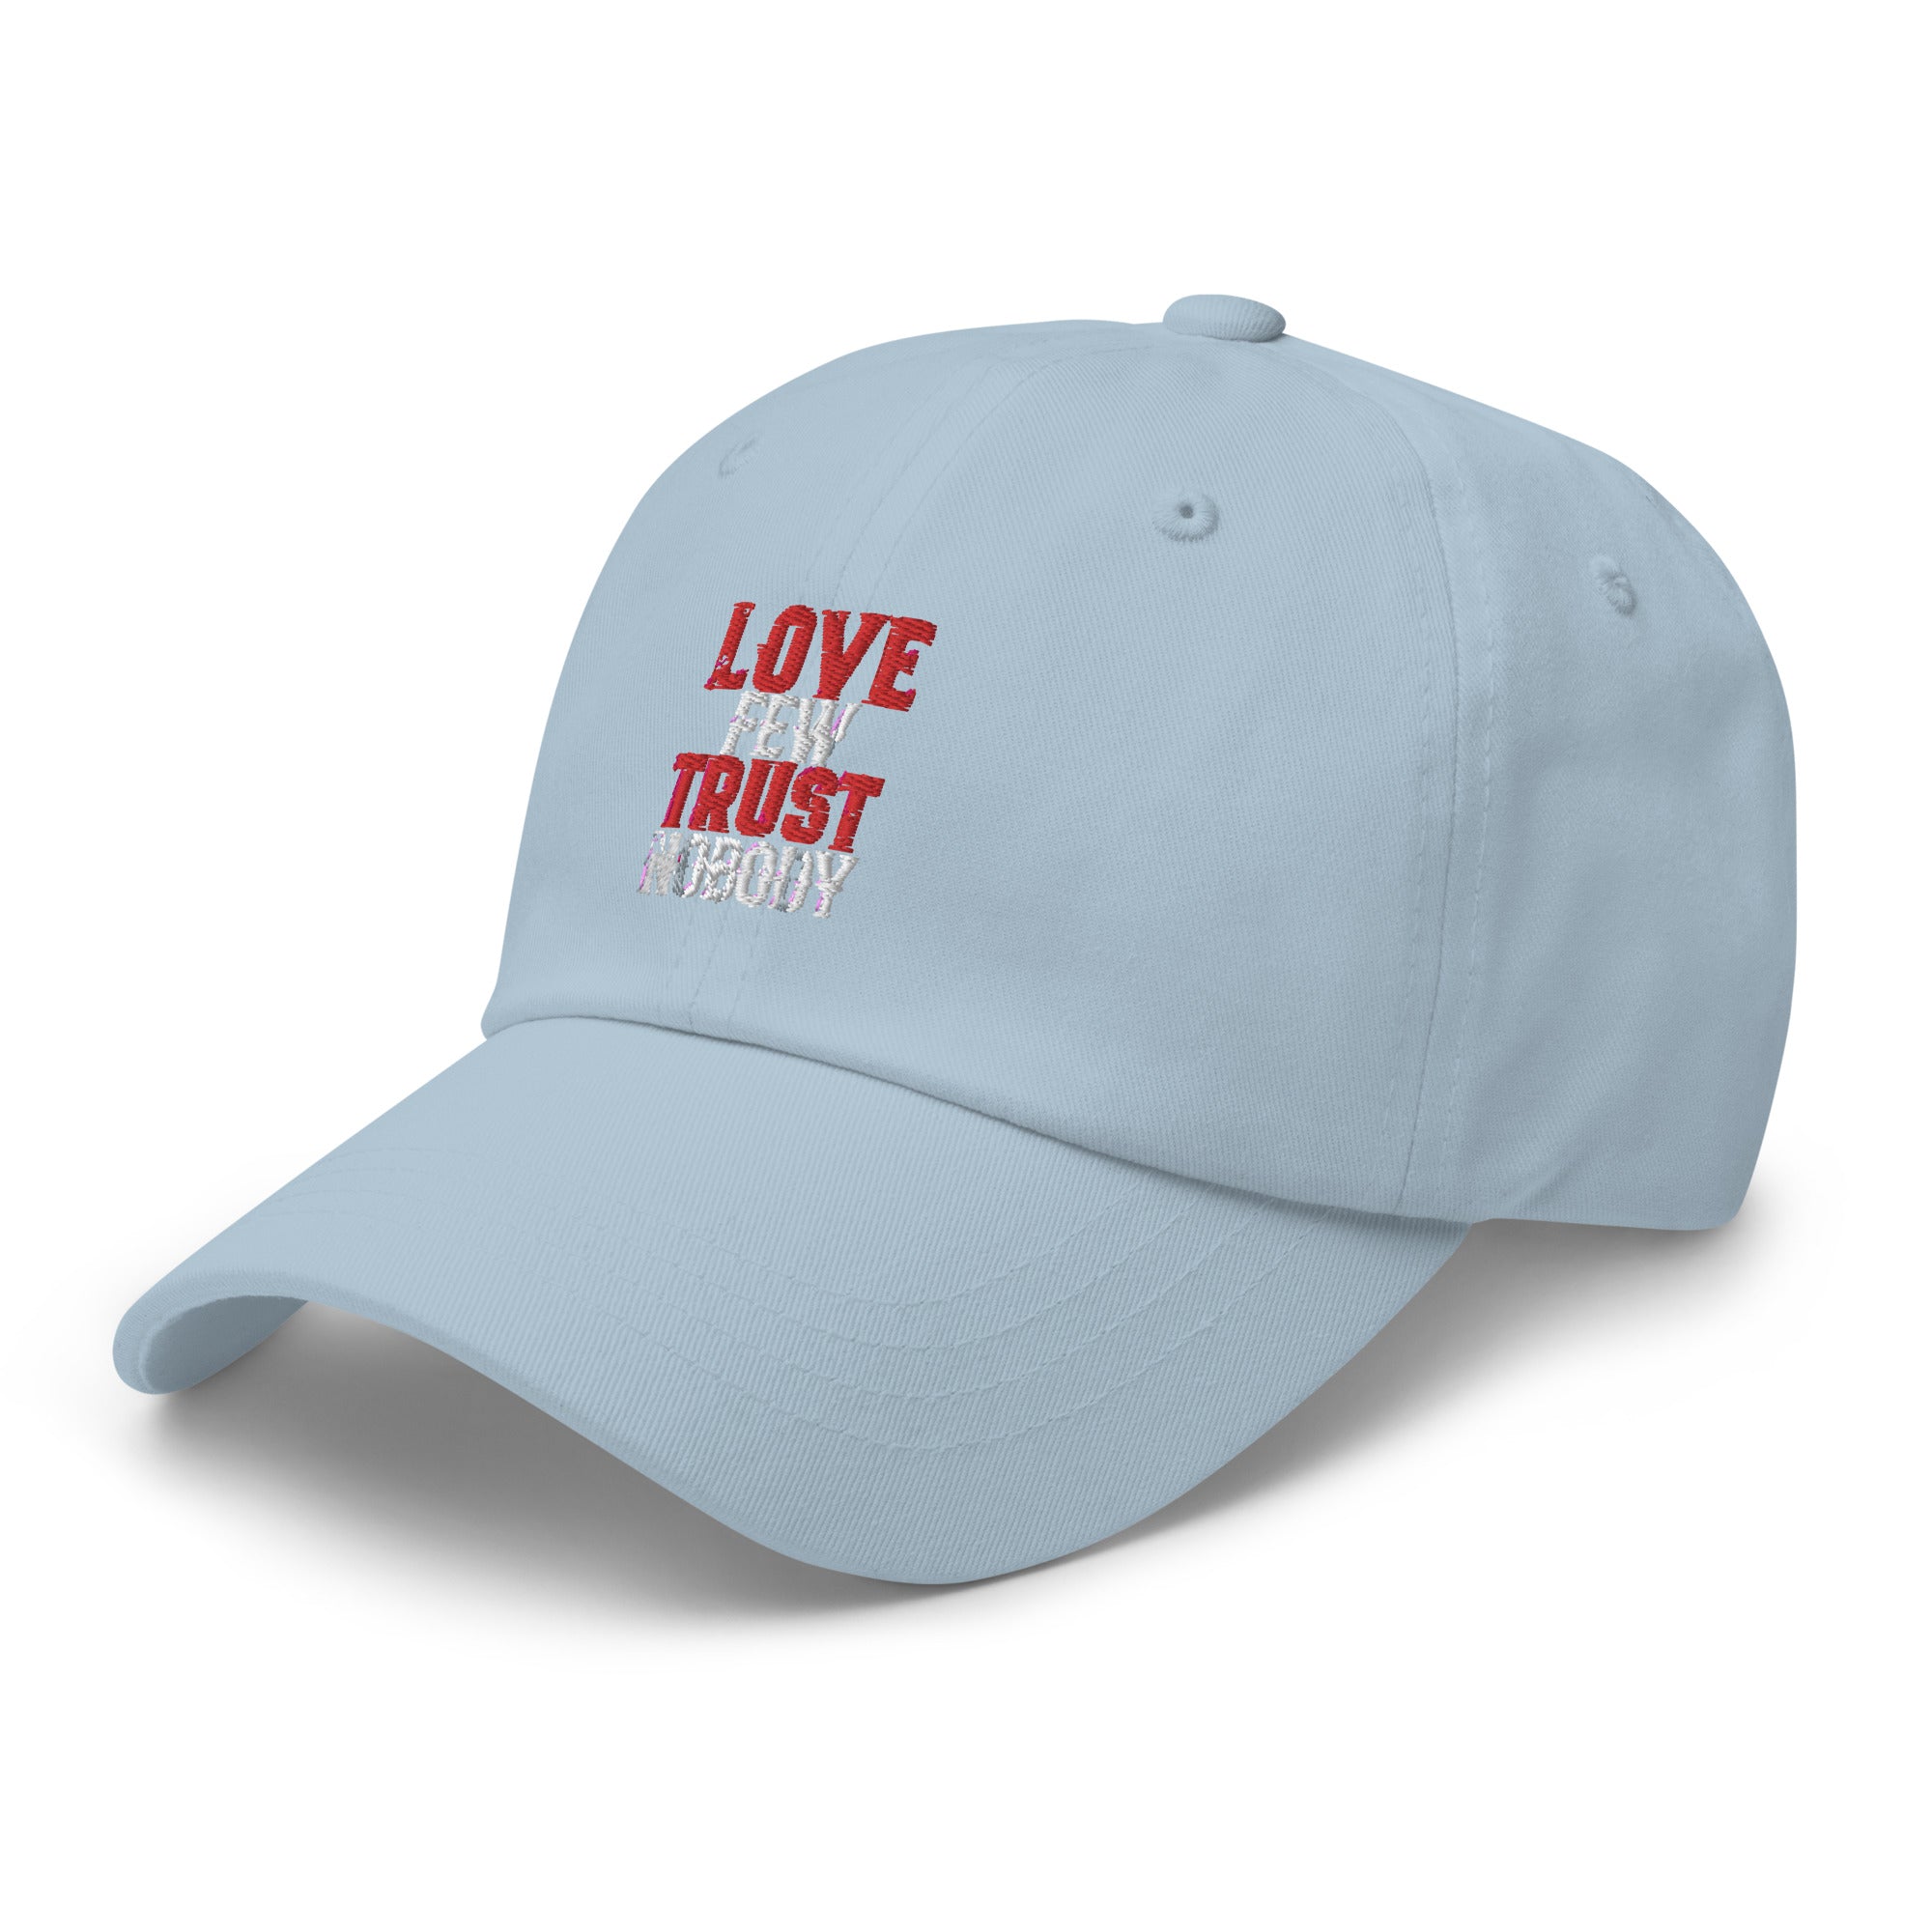 LOVE FEW TRUST NOBODY unisex hat